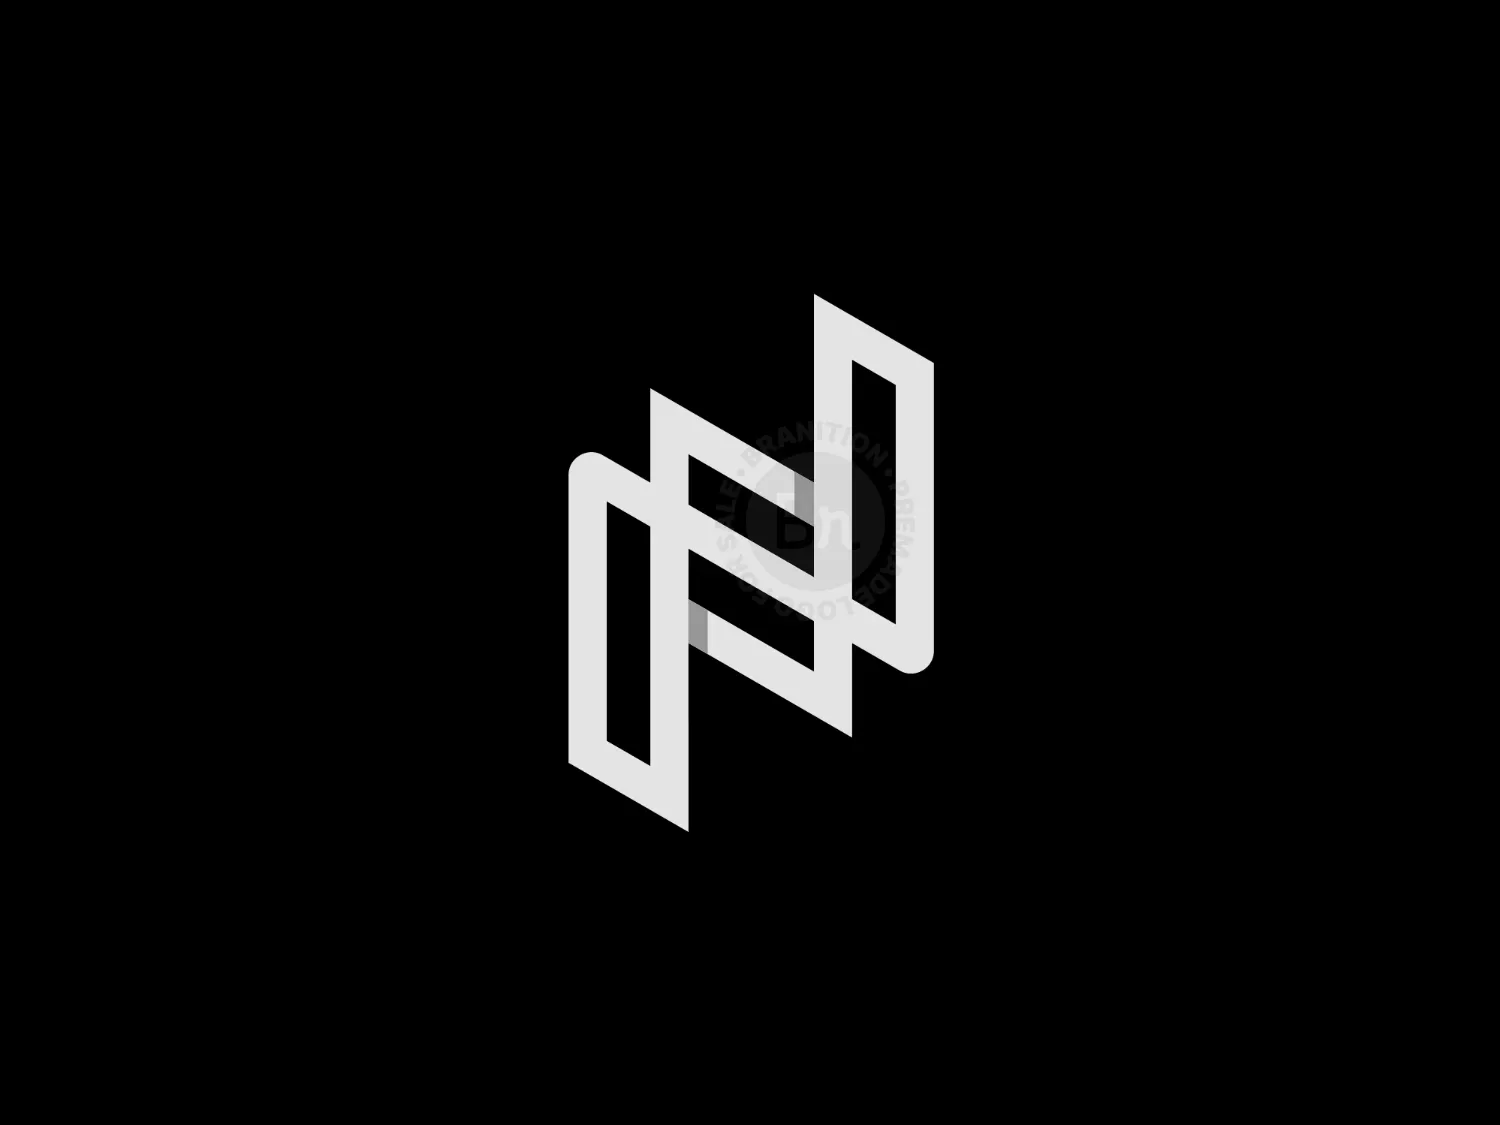 Nf modern letter logo design with swoosh Vector Image